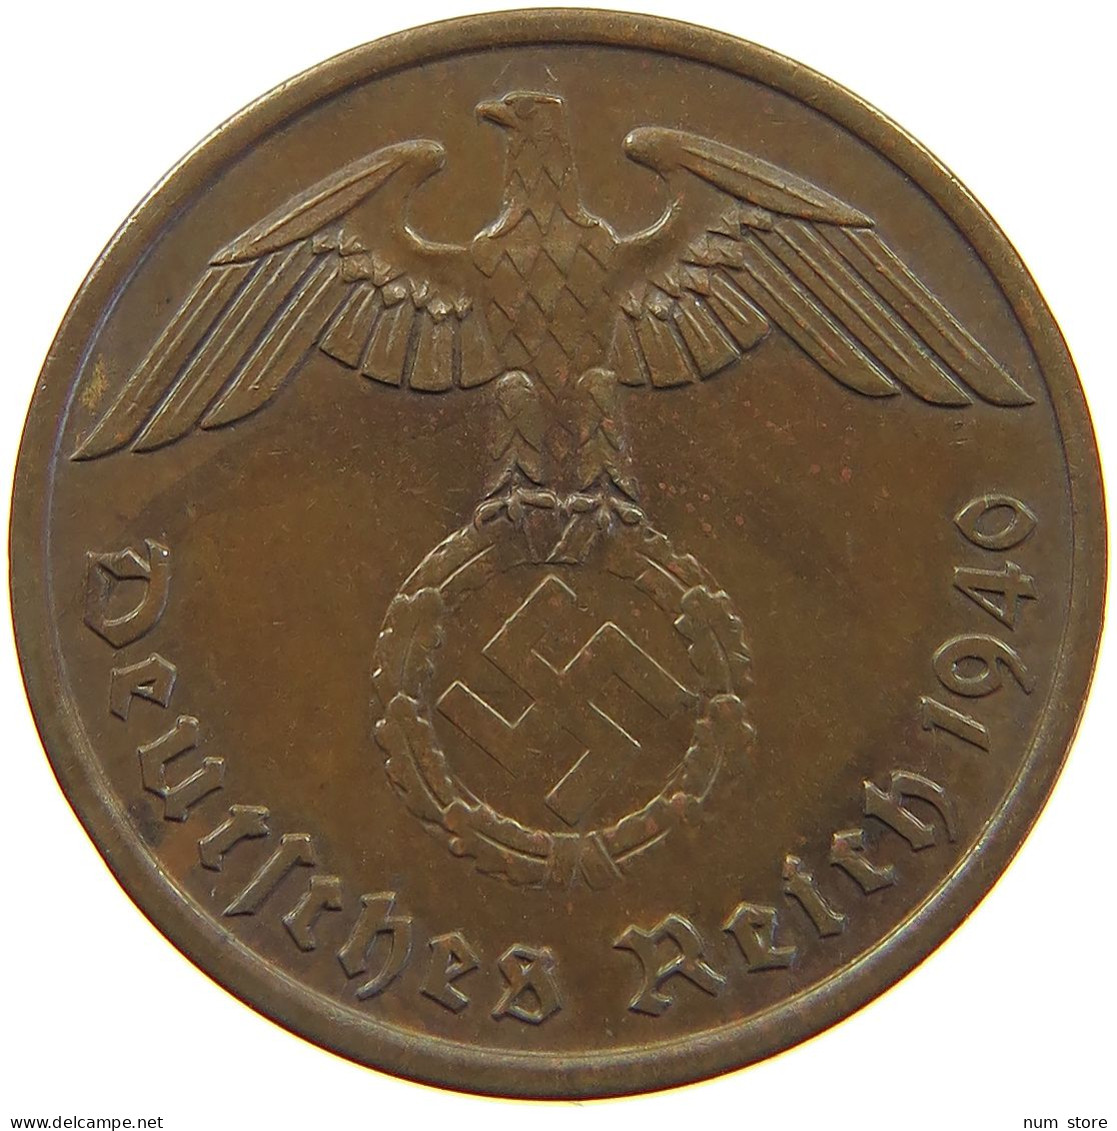 GERMANY 2 PFENNIG 1940 A #c082 0485 - 2 Reichspfennig